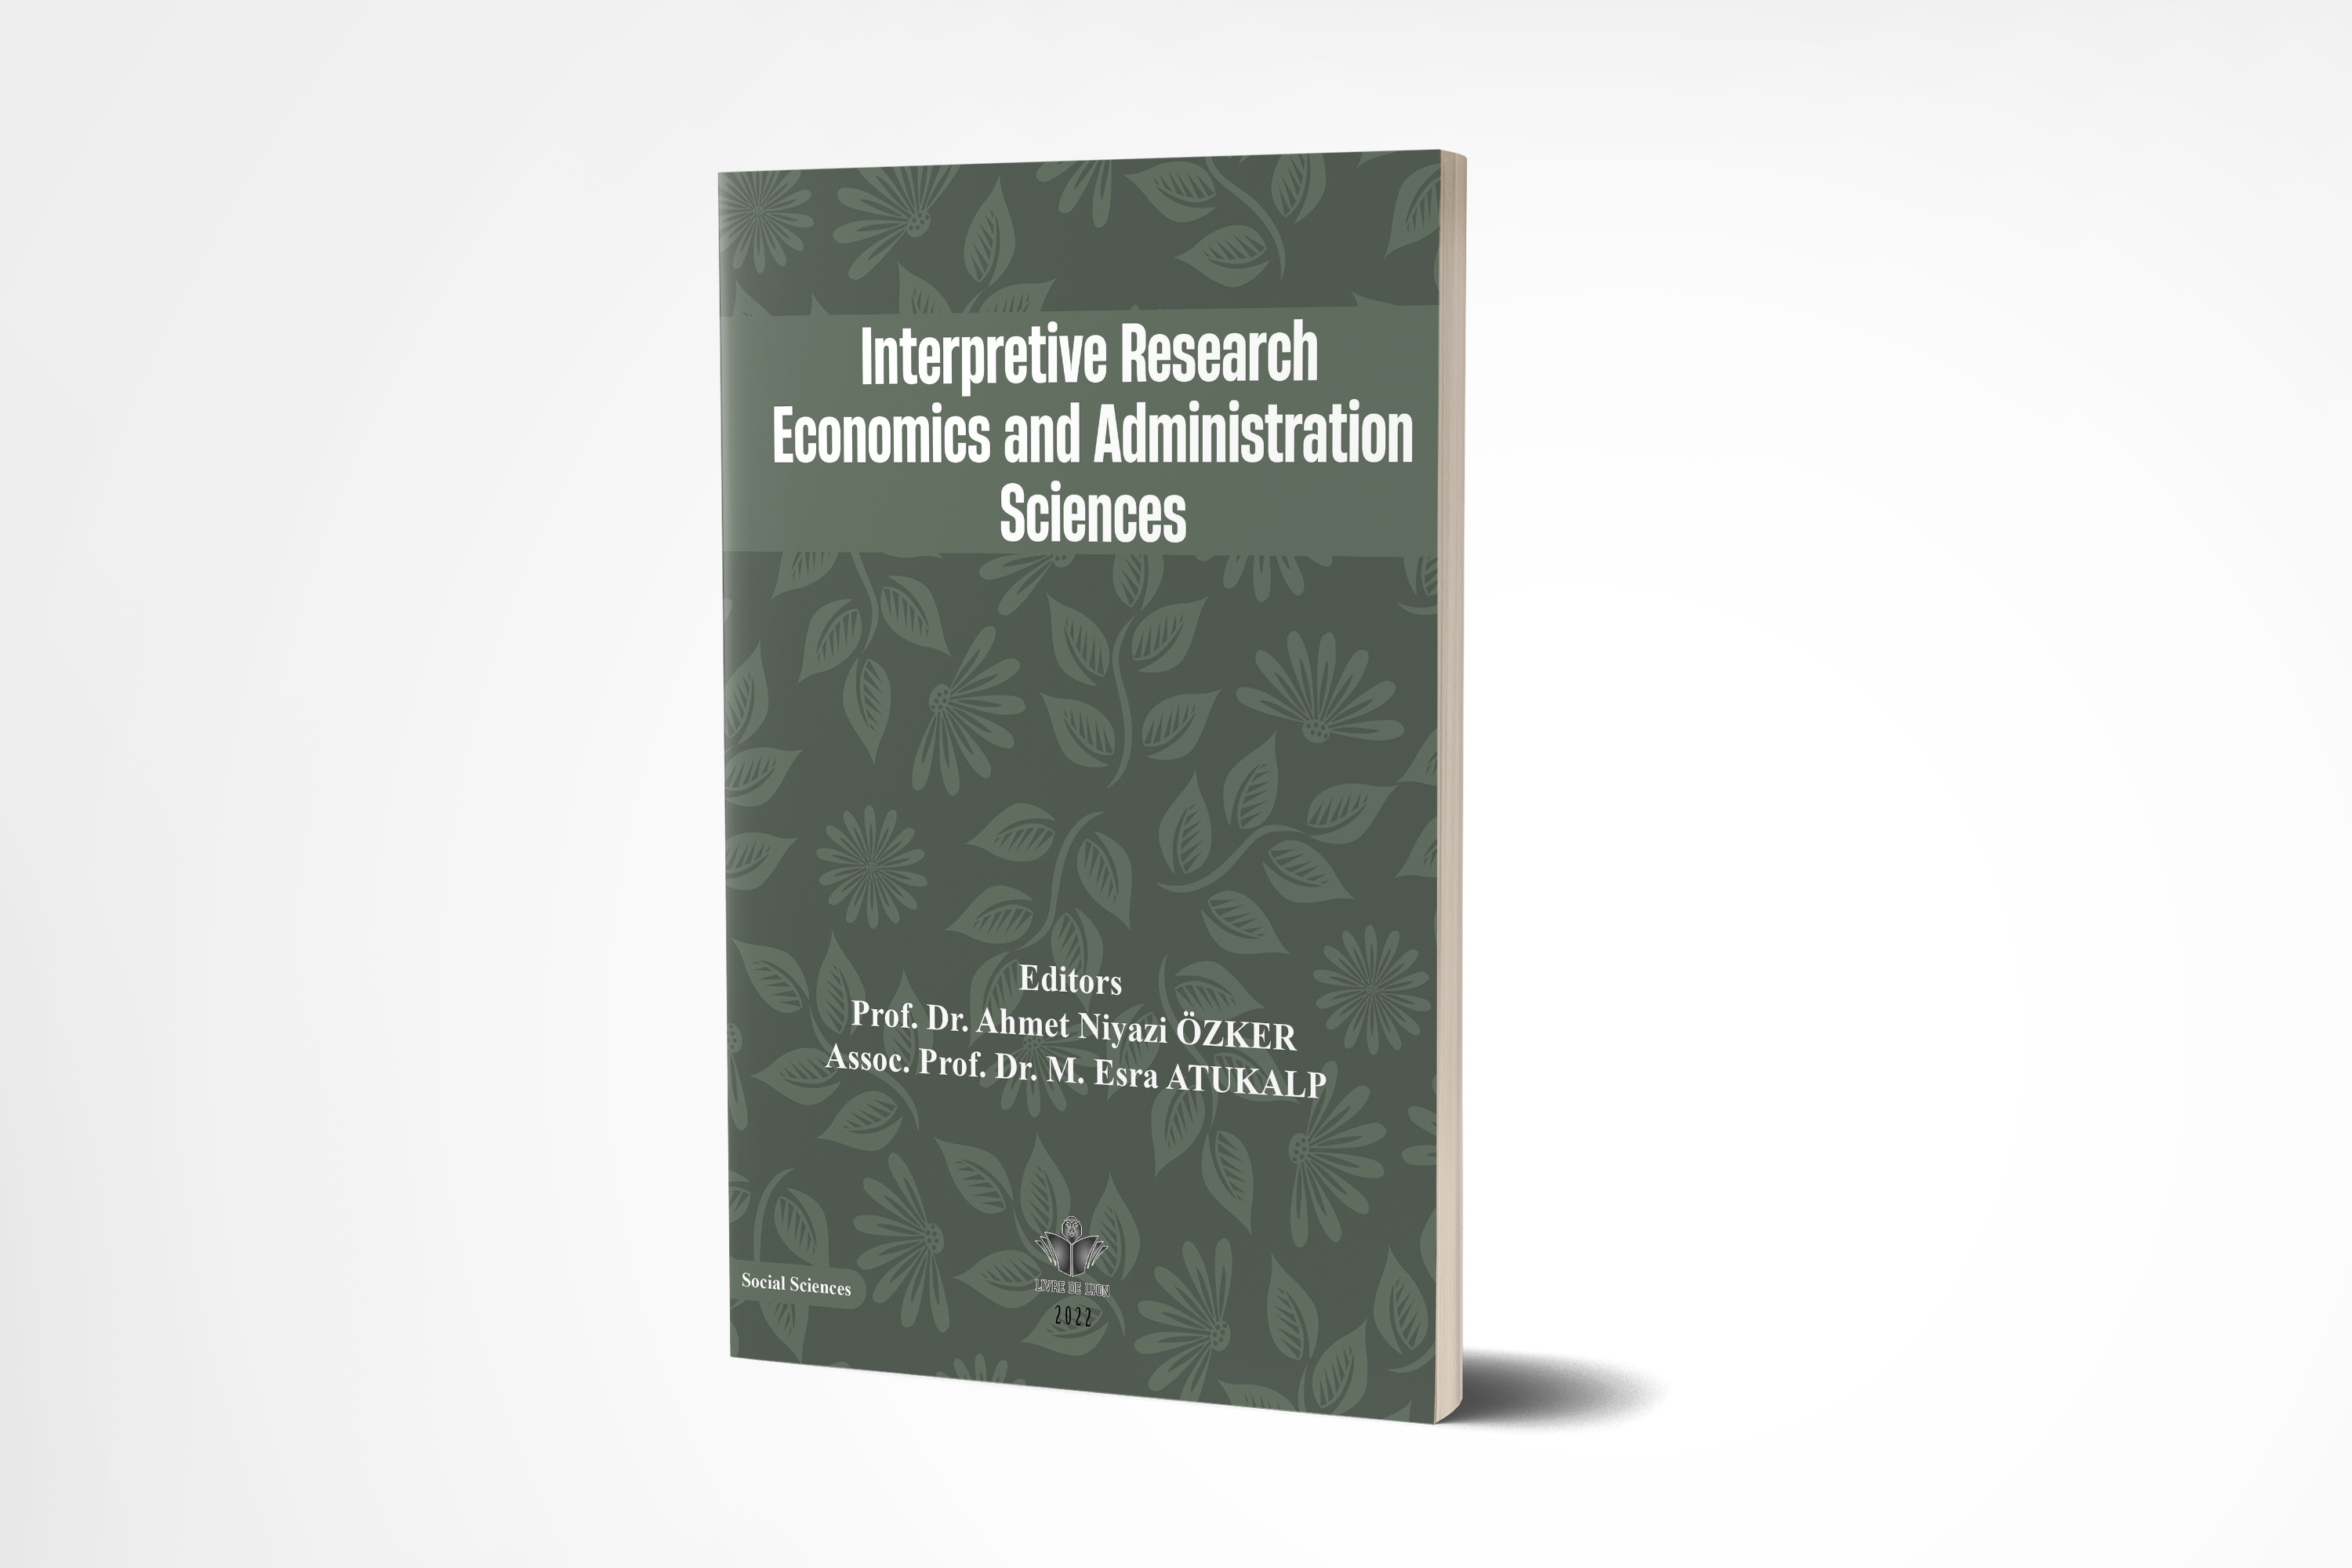 Interpretive Research Economics and Administration Sciences